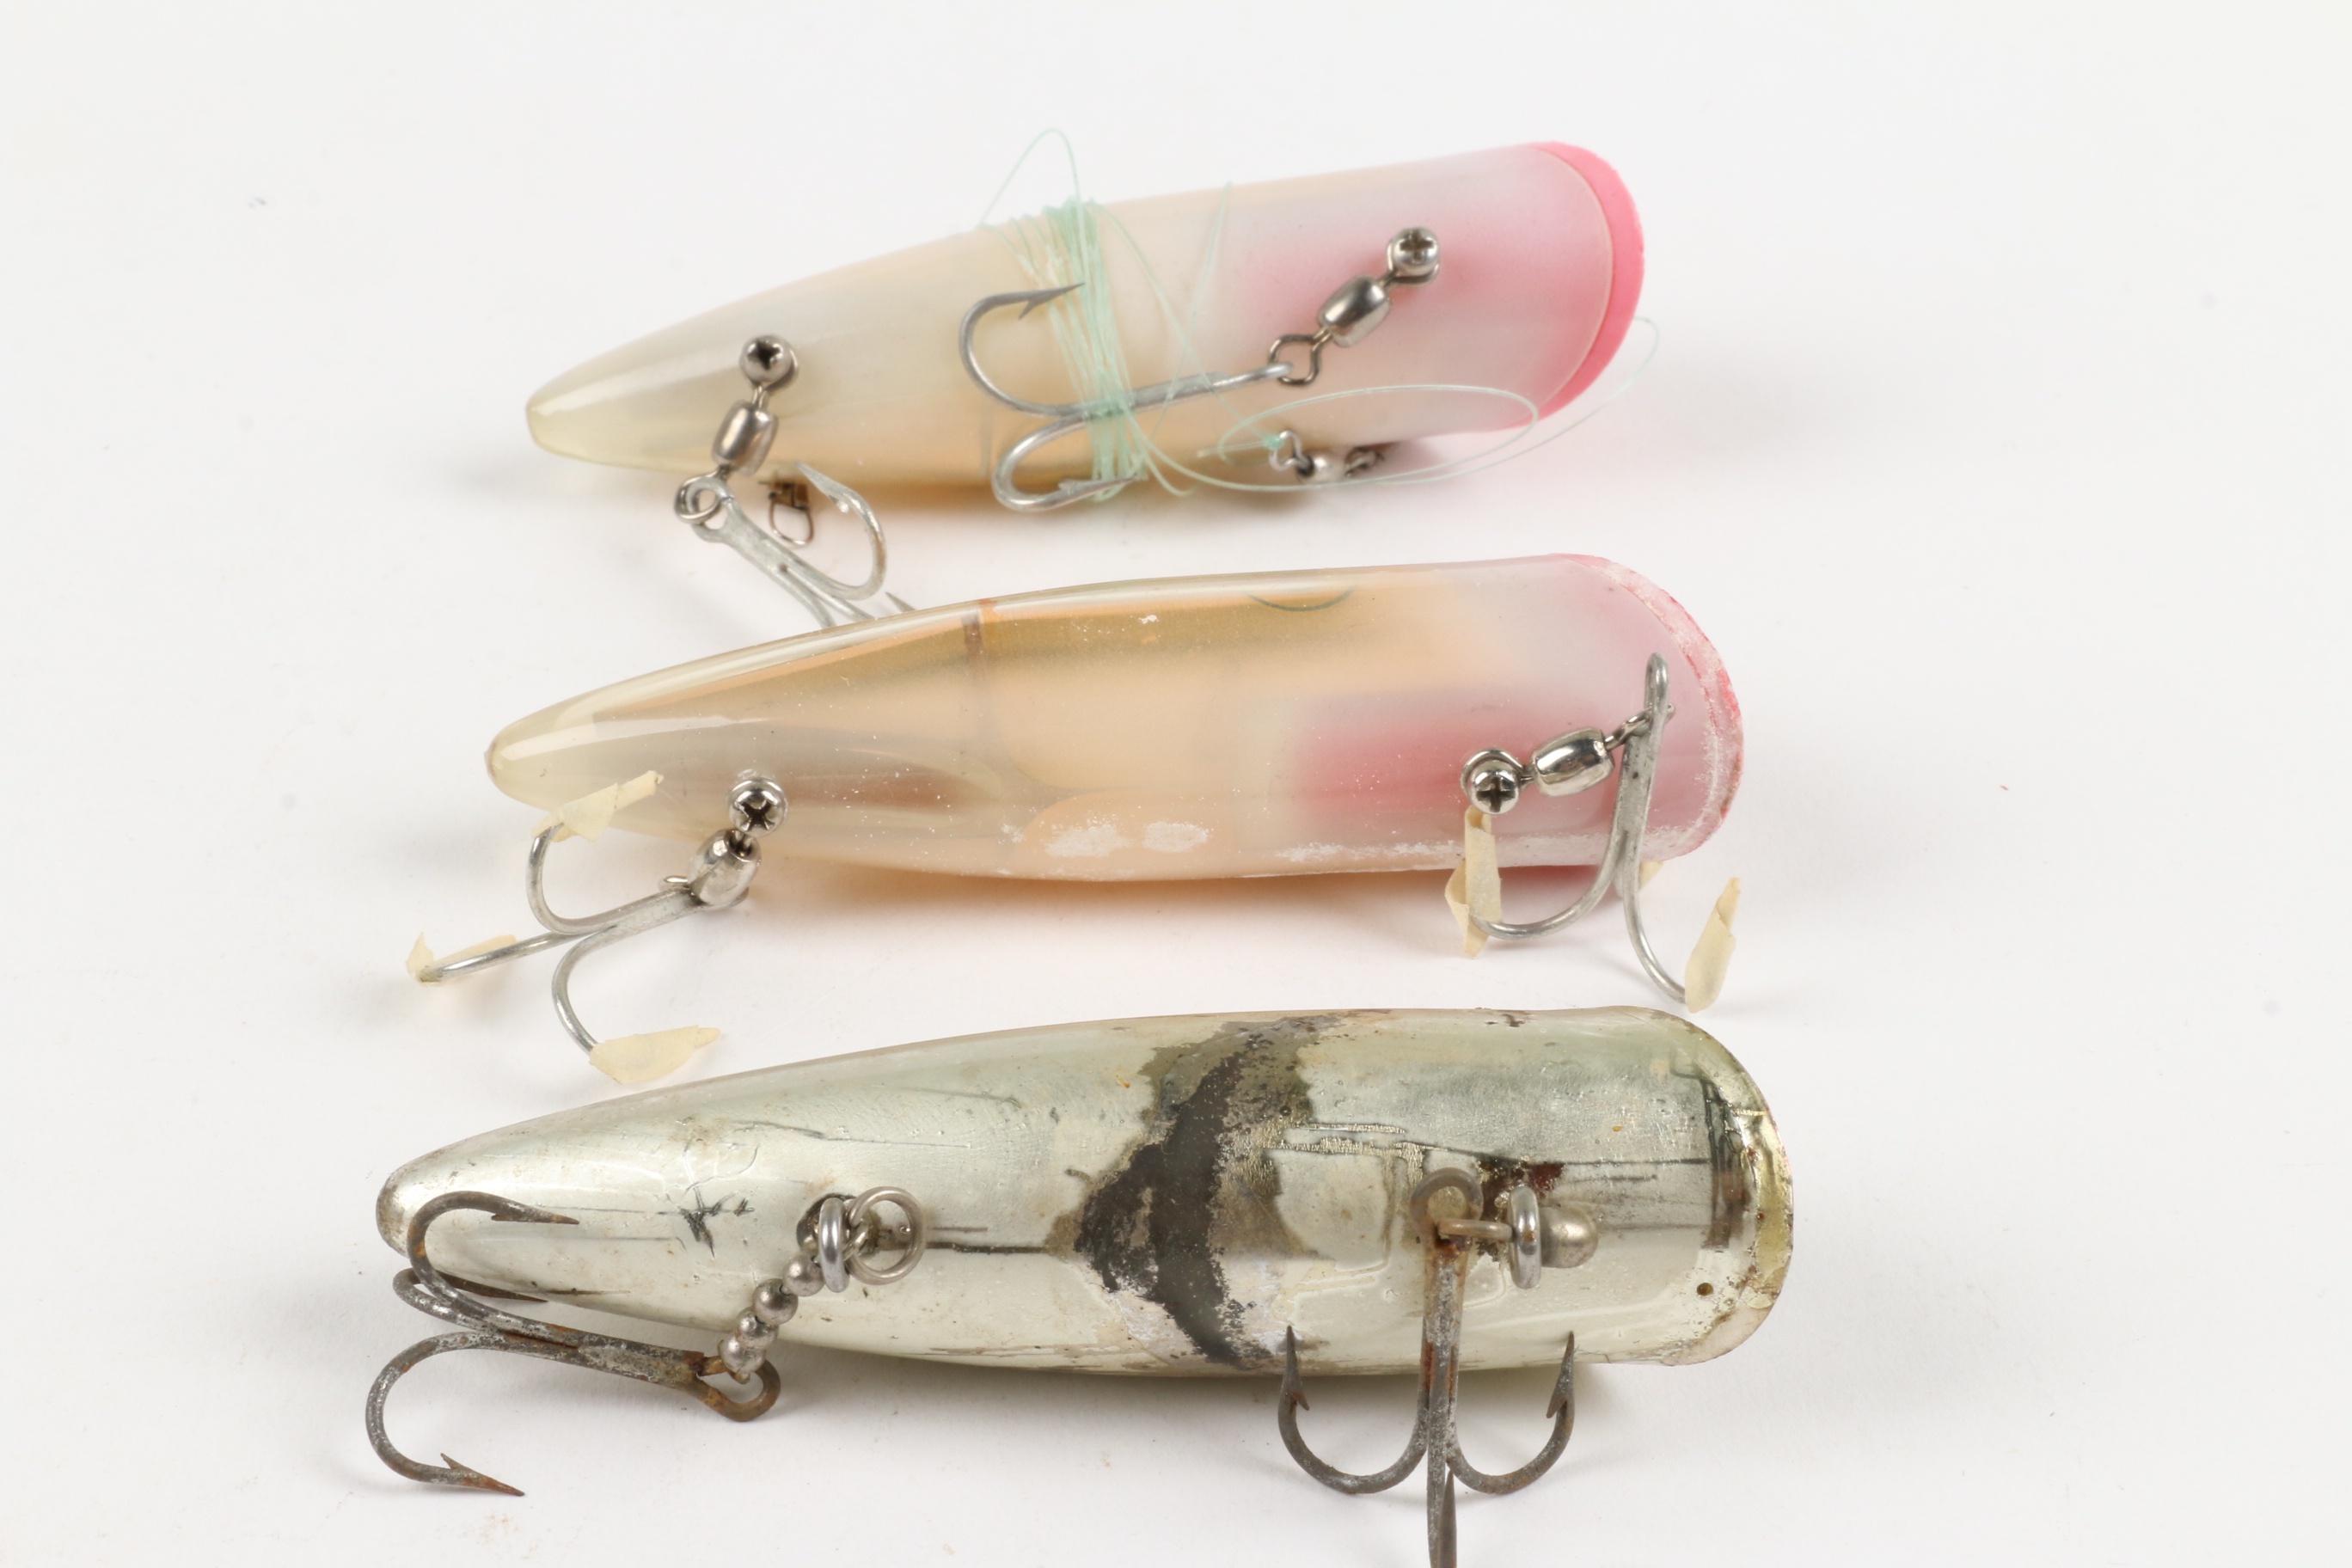 2-Vintage Fishing Lure Mac's Squid Salmon Plug #15 Point Special